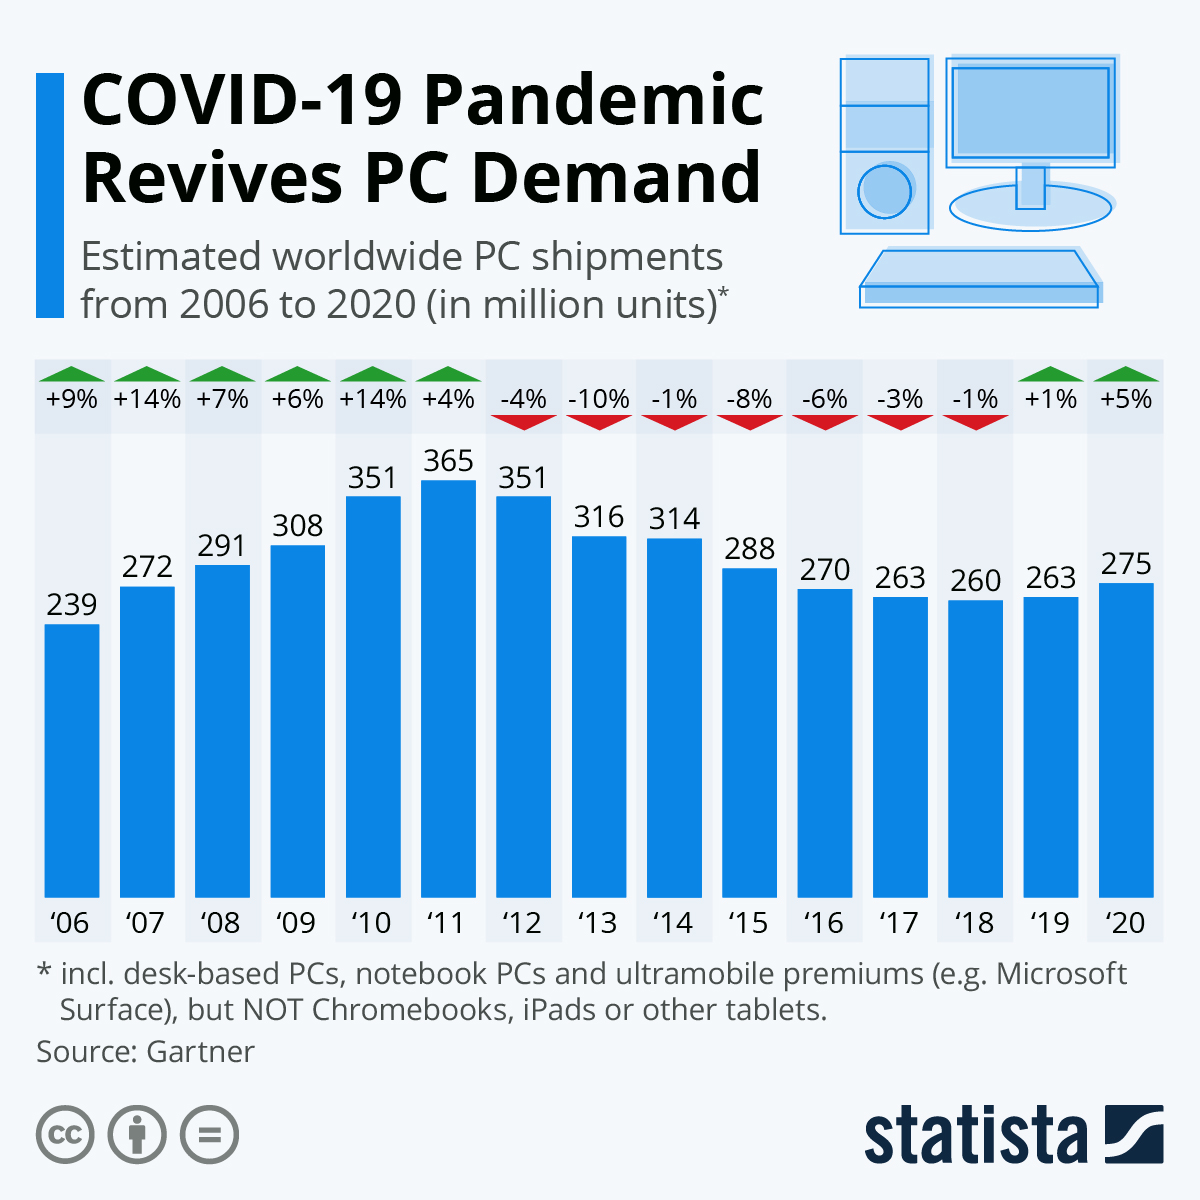 COVID-19 Pandemic Revives PC Demand